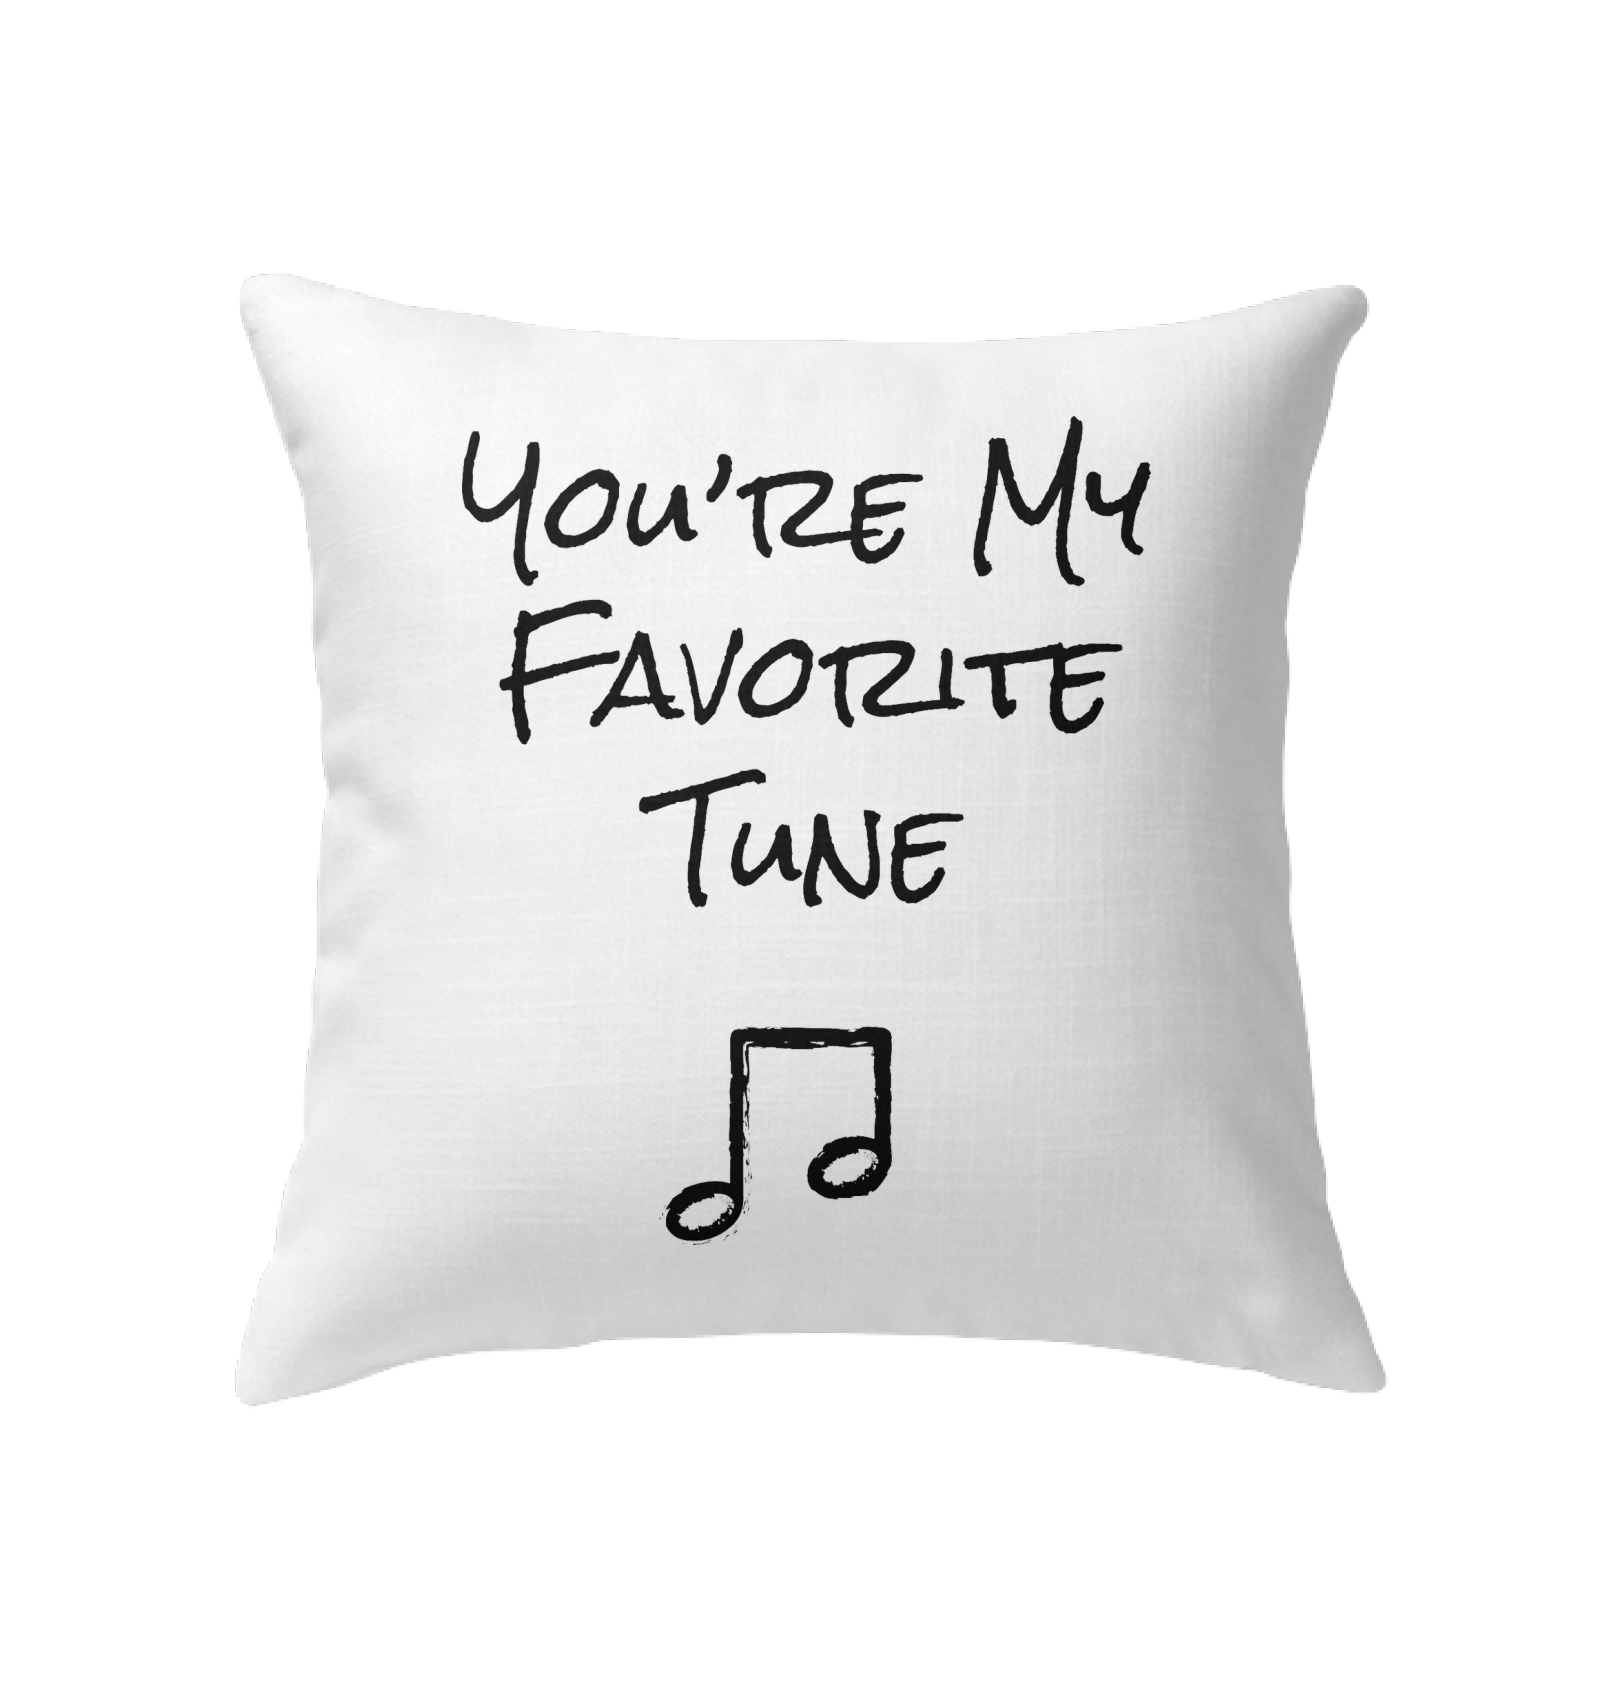 You're My Favorite Tune - Indoor Pillow